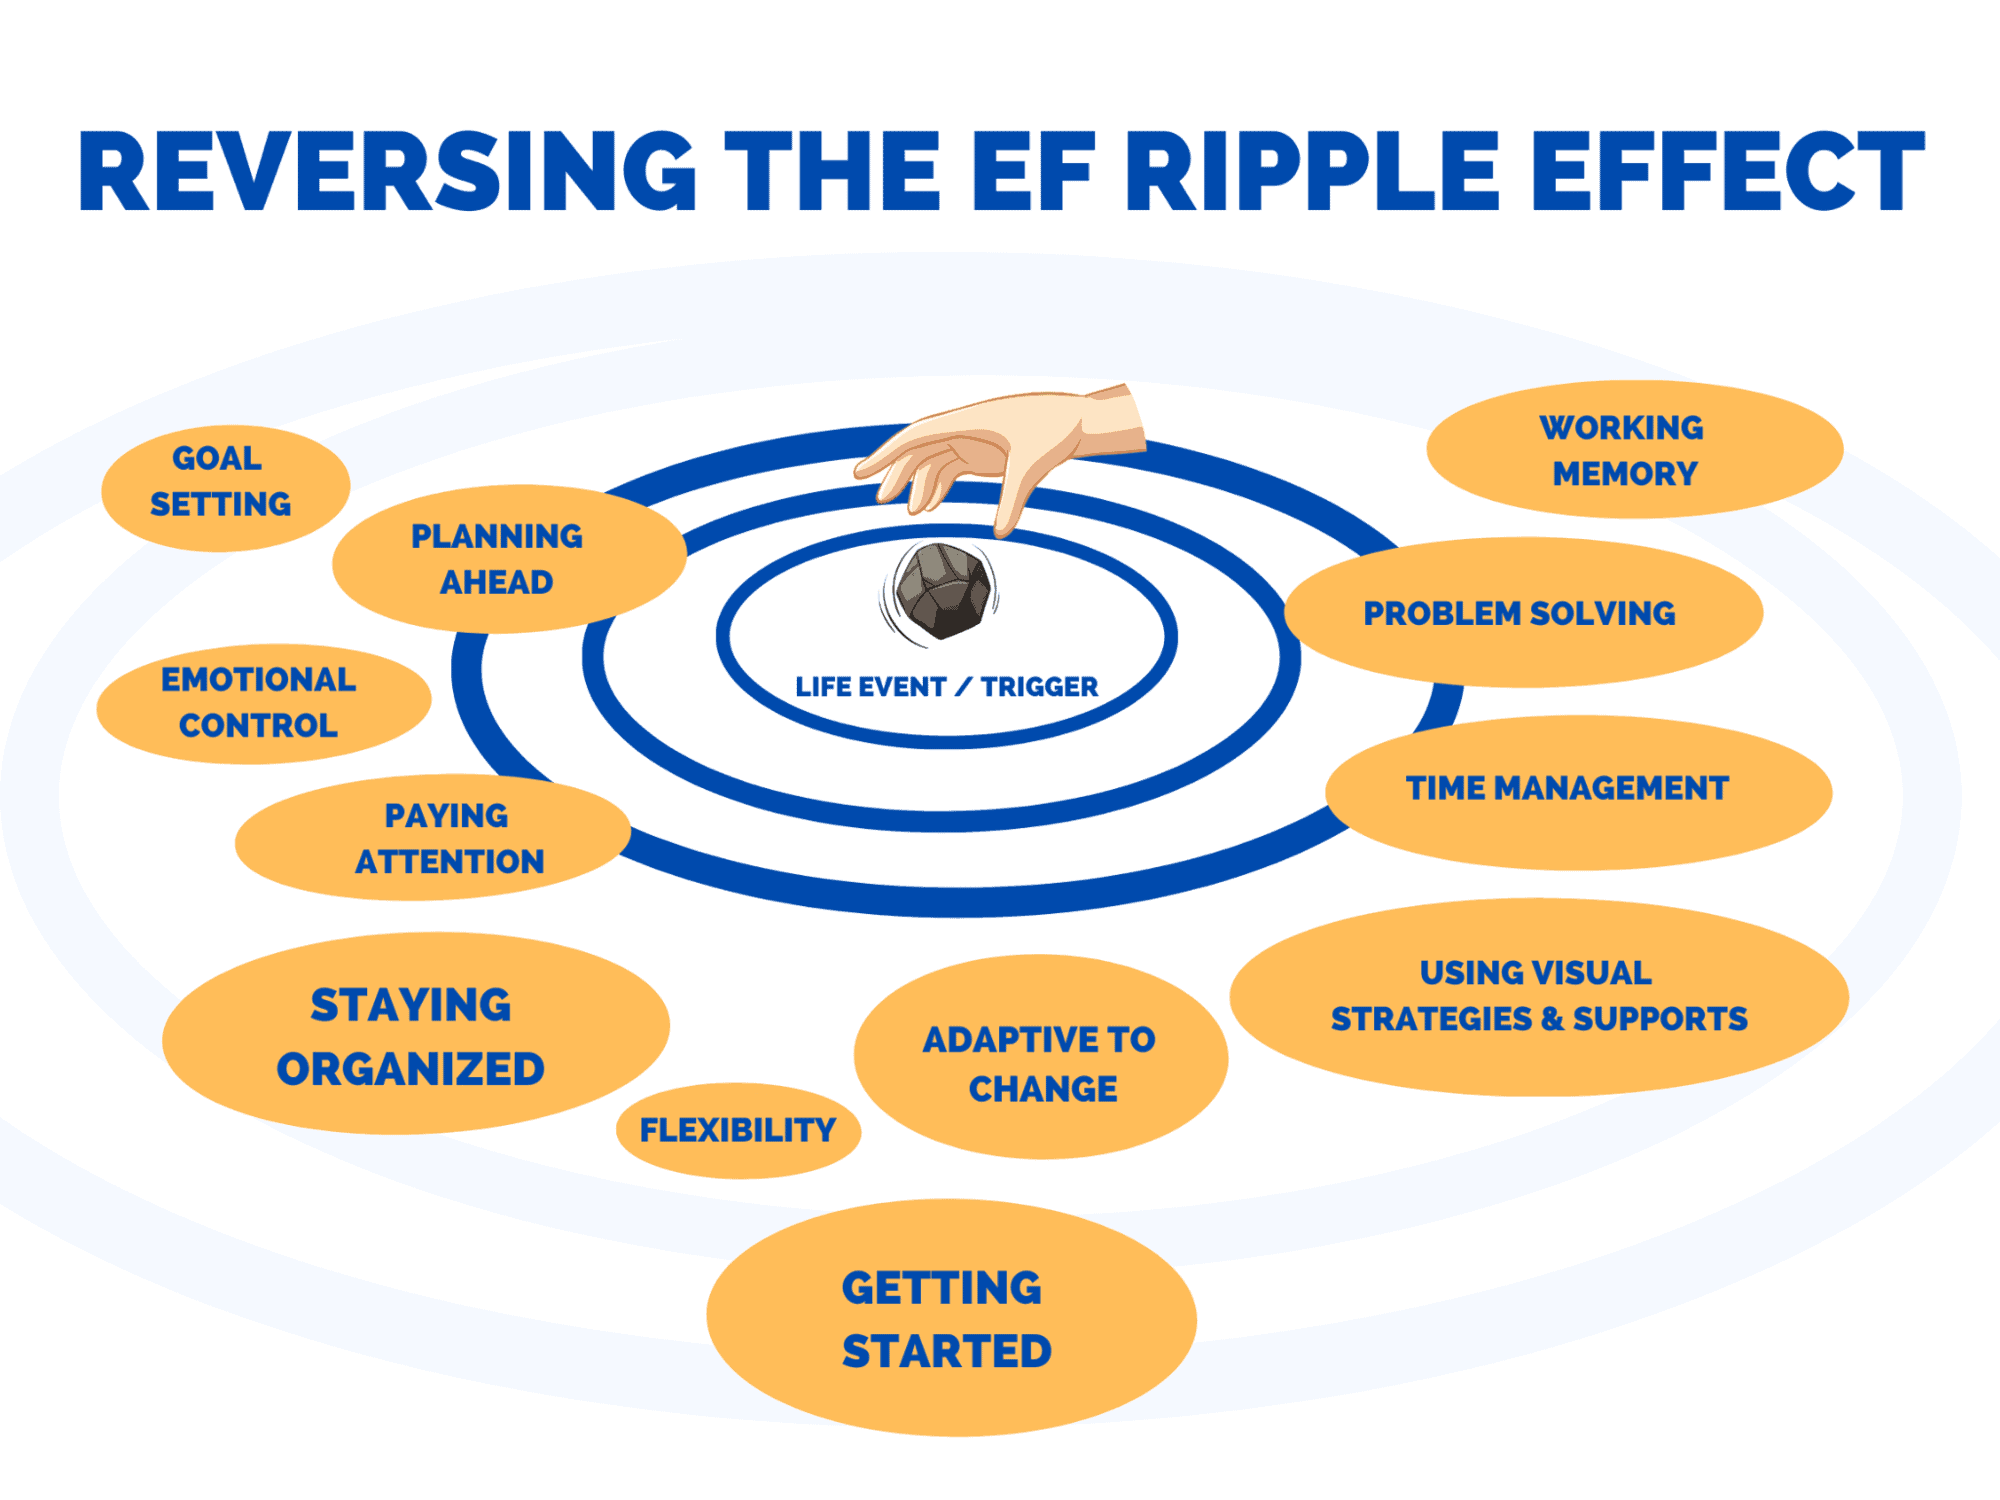 Ripple Effect - An EA Studio - Official EA Site